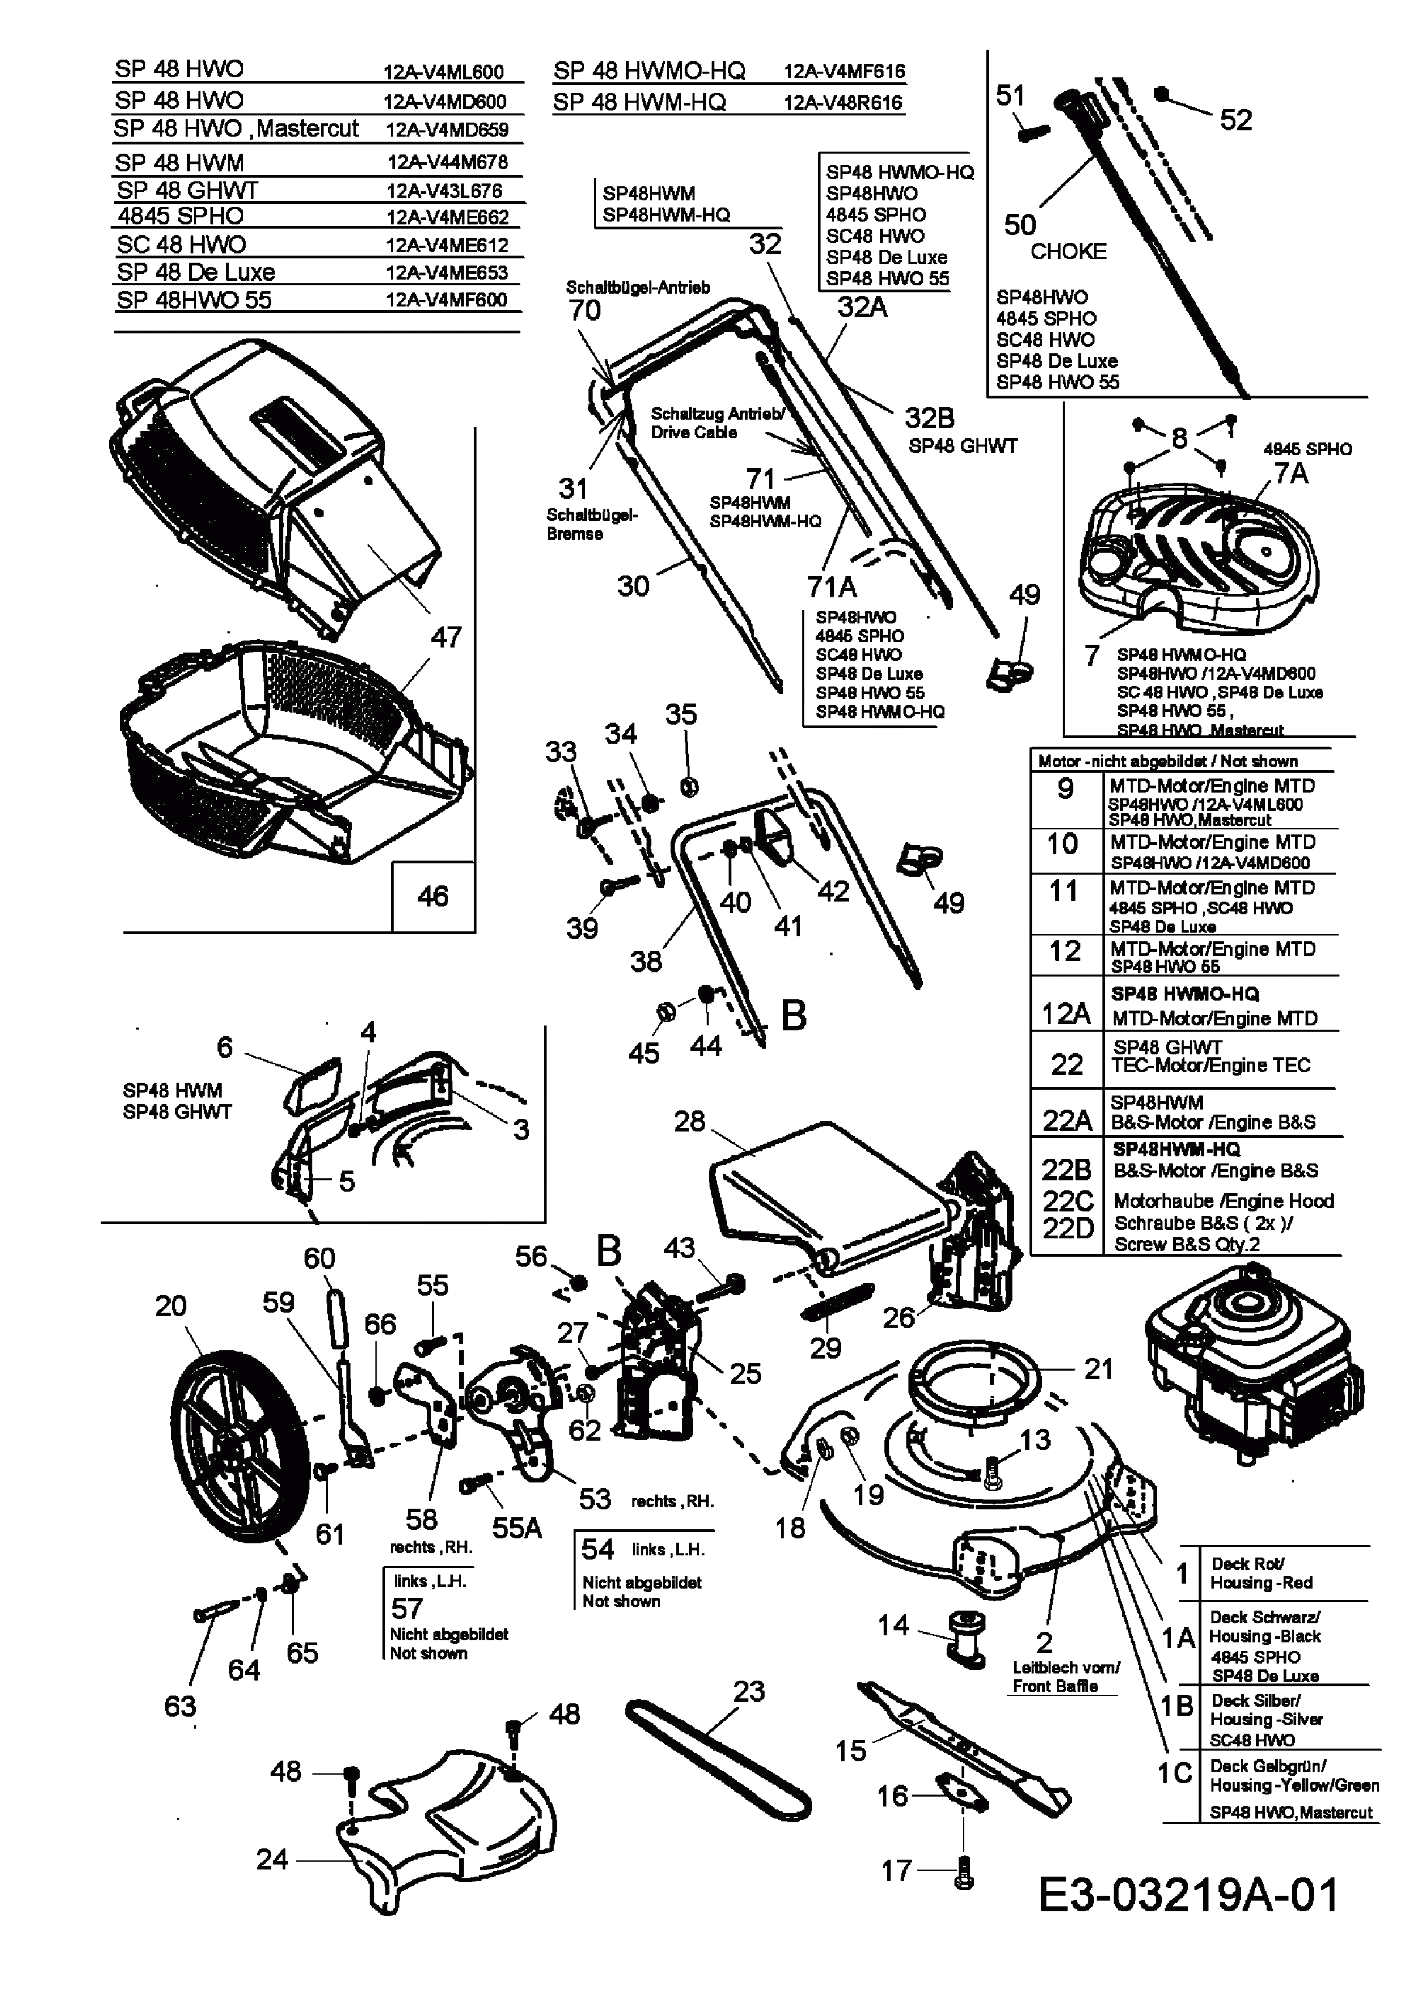 MTD Артикул 12A-V43L676 (год выпуска 2007). Основная деталировка